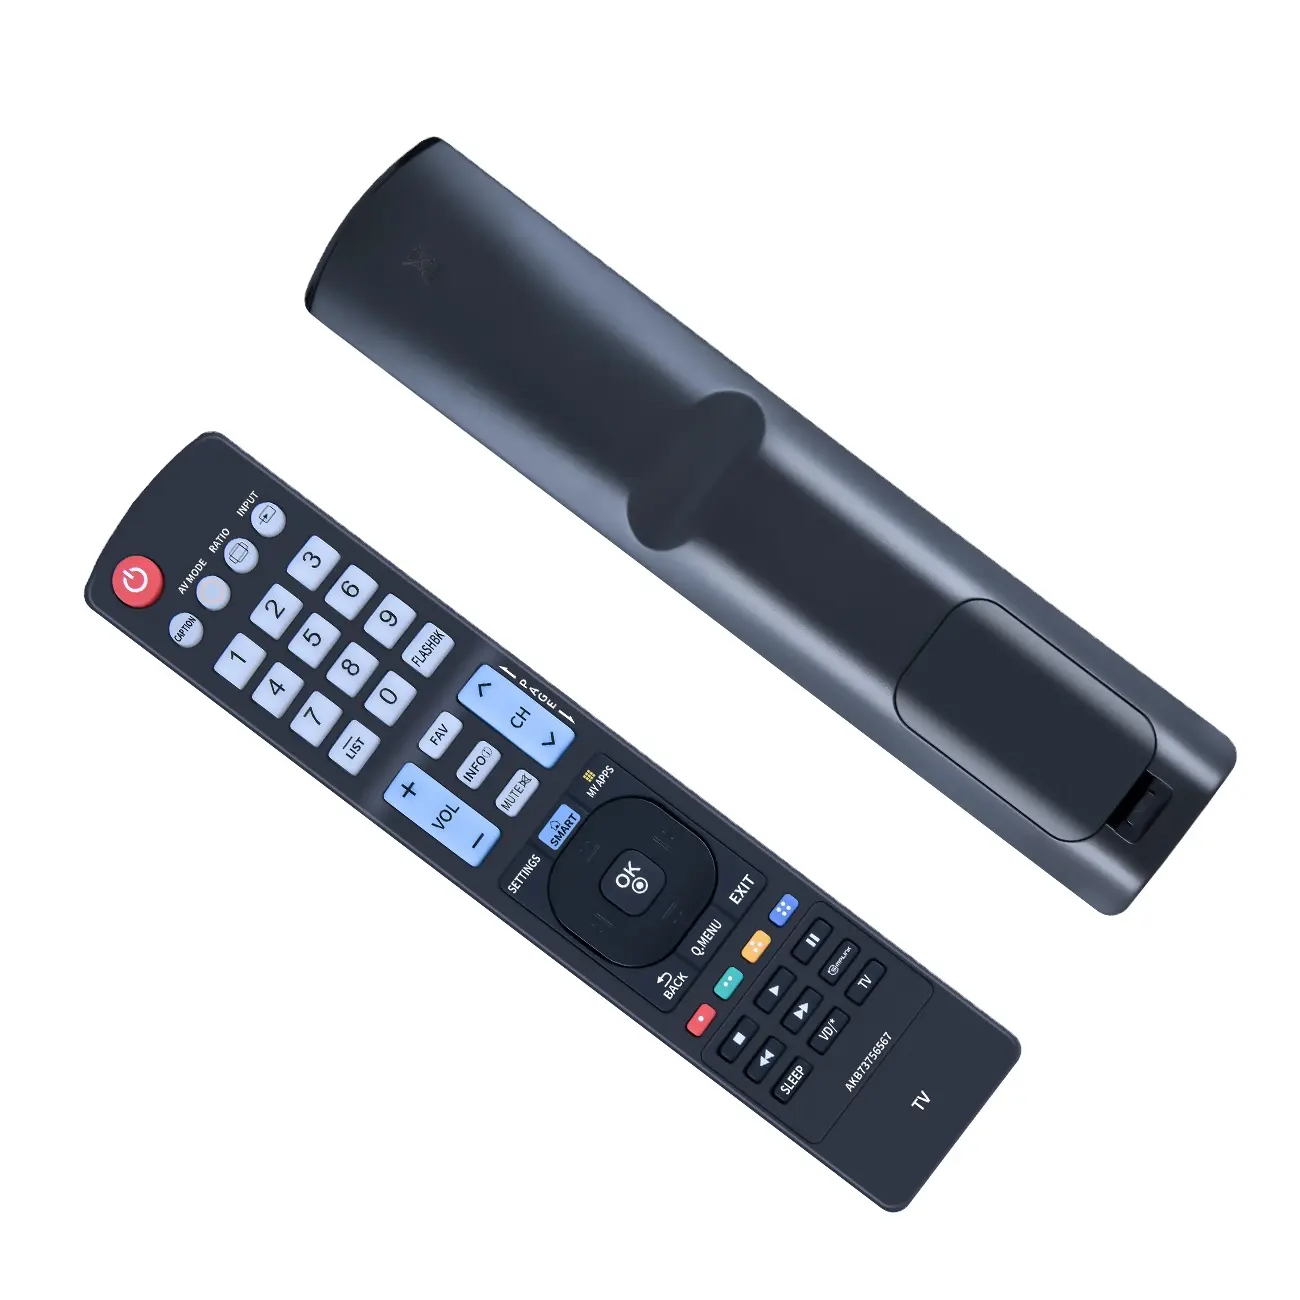 Baru Remote Remote pengganti untuk LG TV 32LB5800 39LB5800 Remote 47LB5800